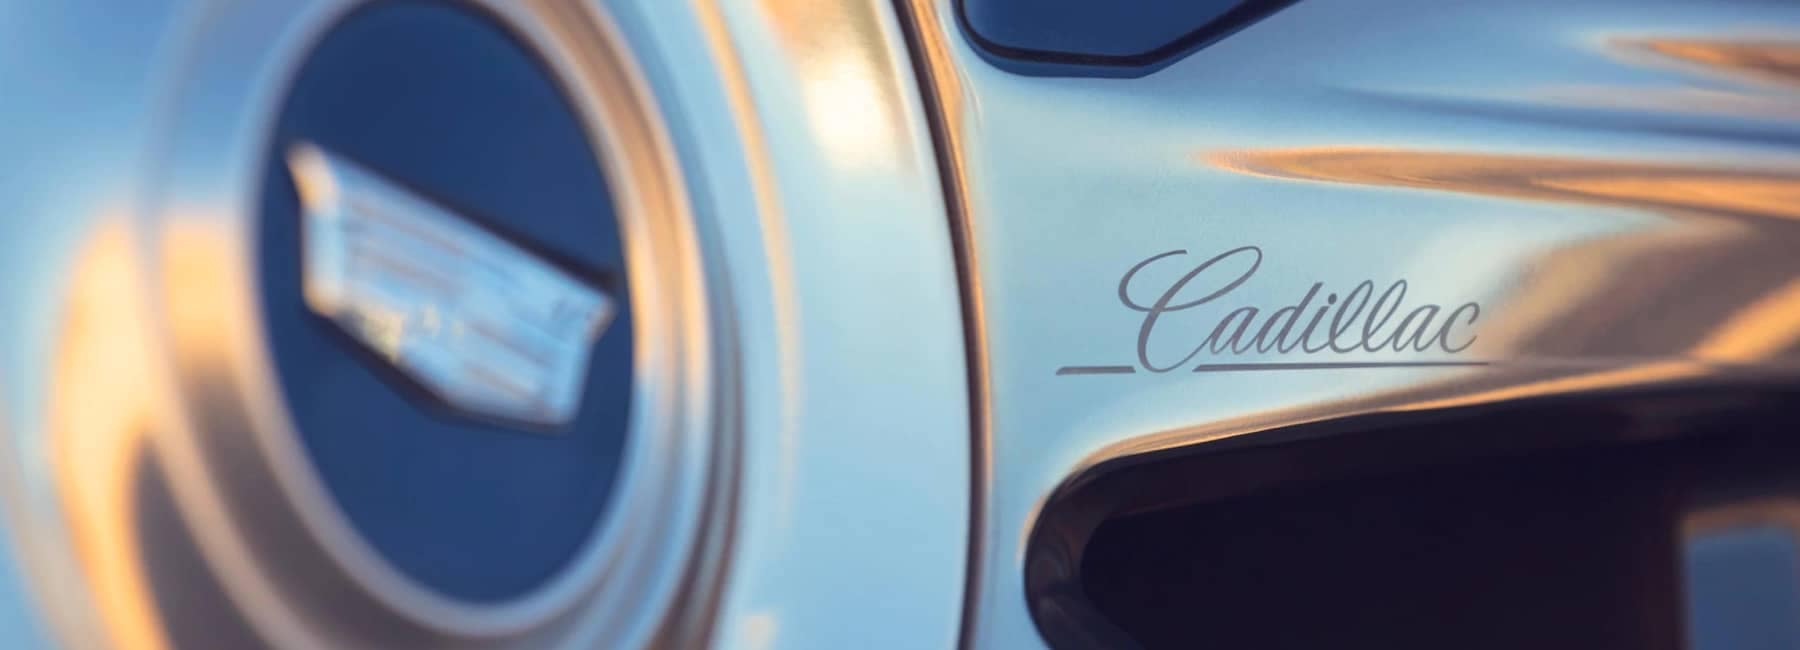 Cadillac Escalde Wheel Close Up